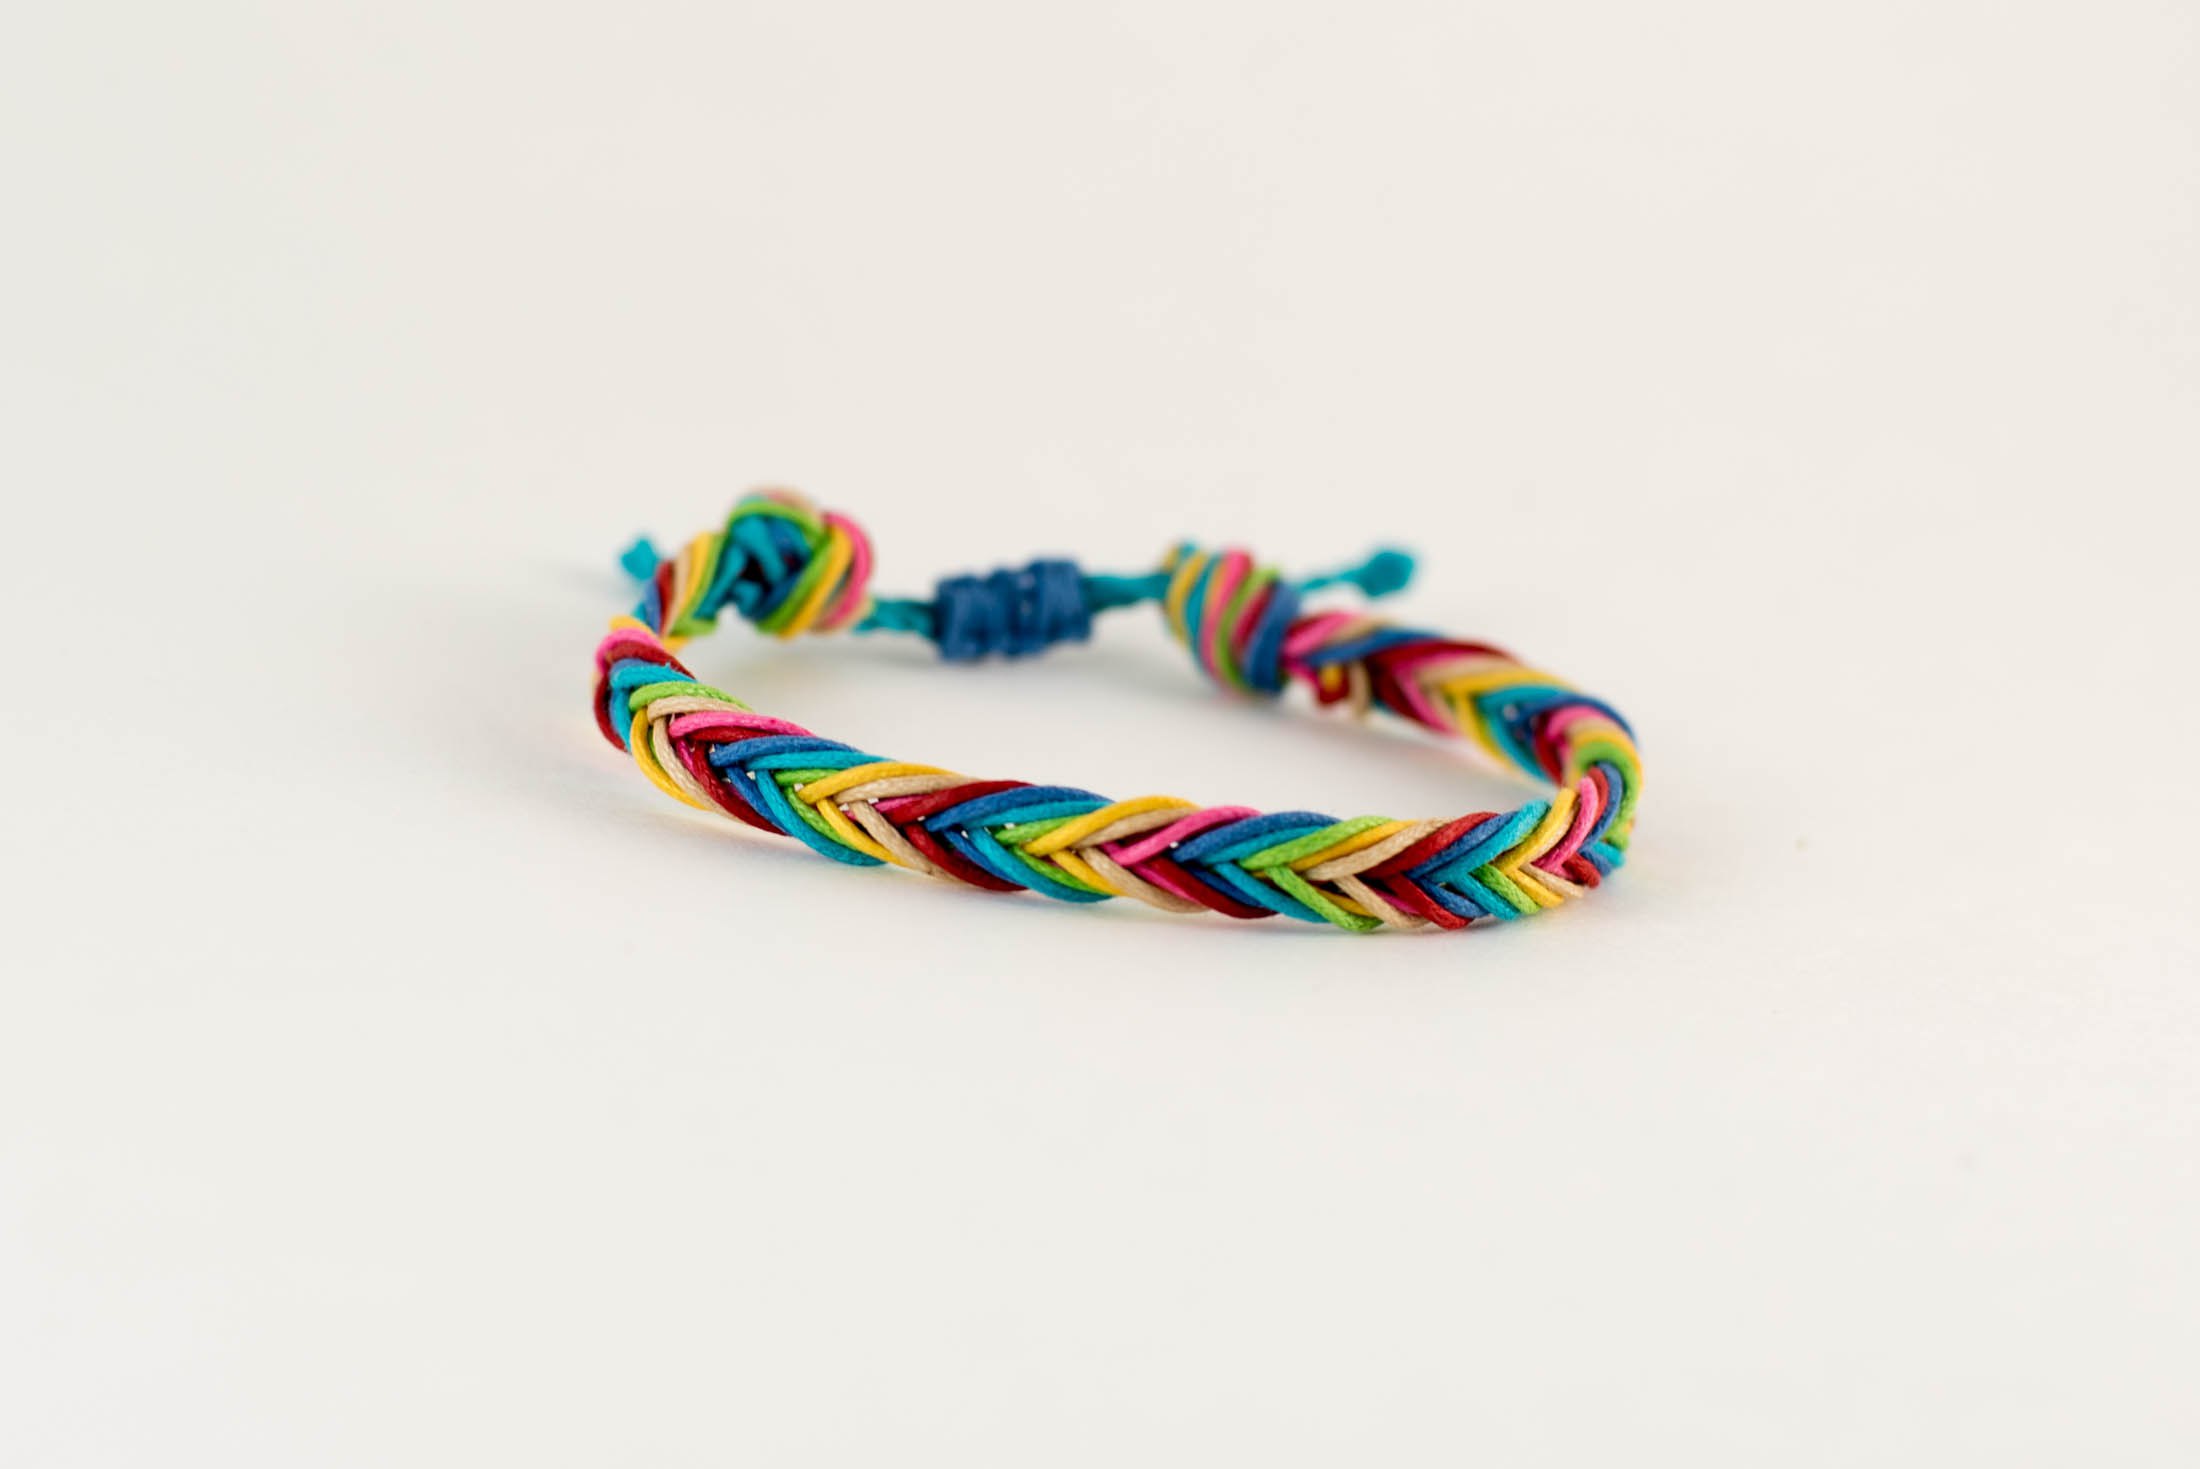 DIY fishtail braid macrame friendship bracelet (via likelybysea.com)